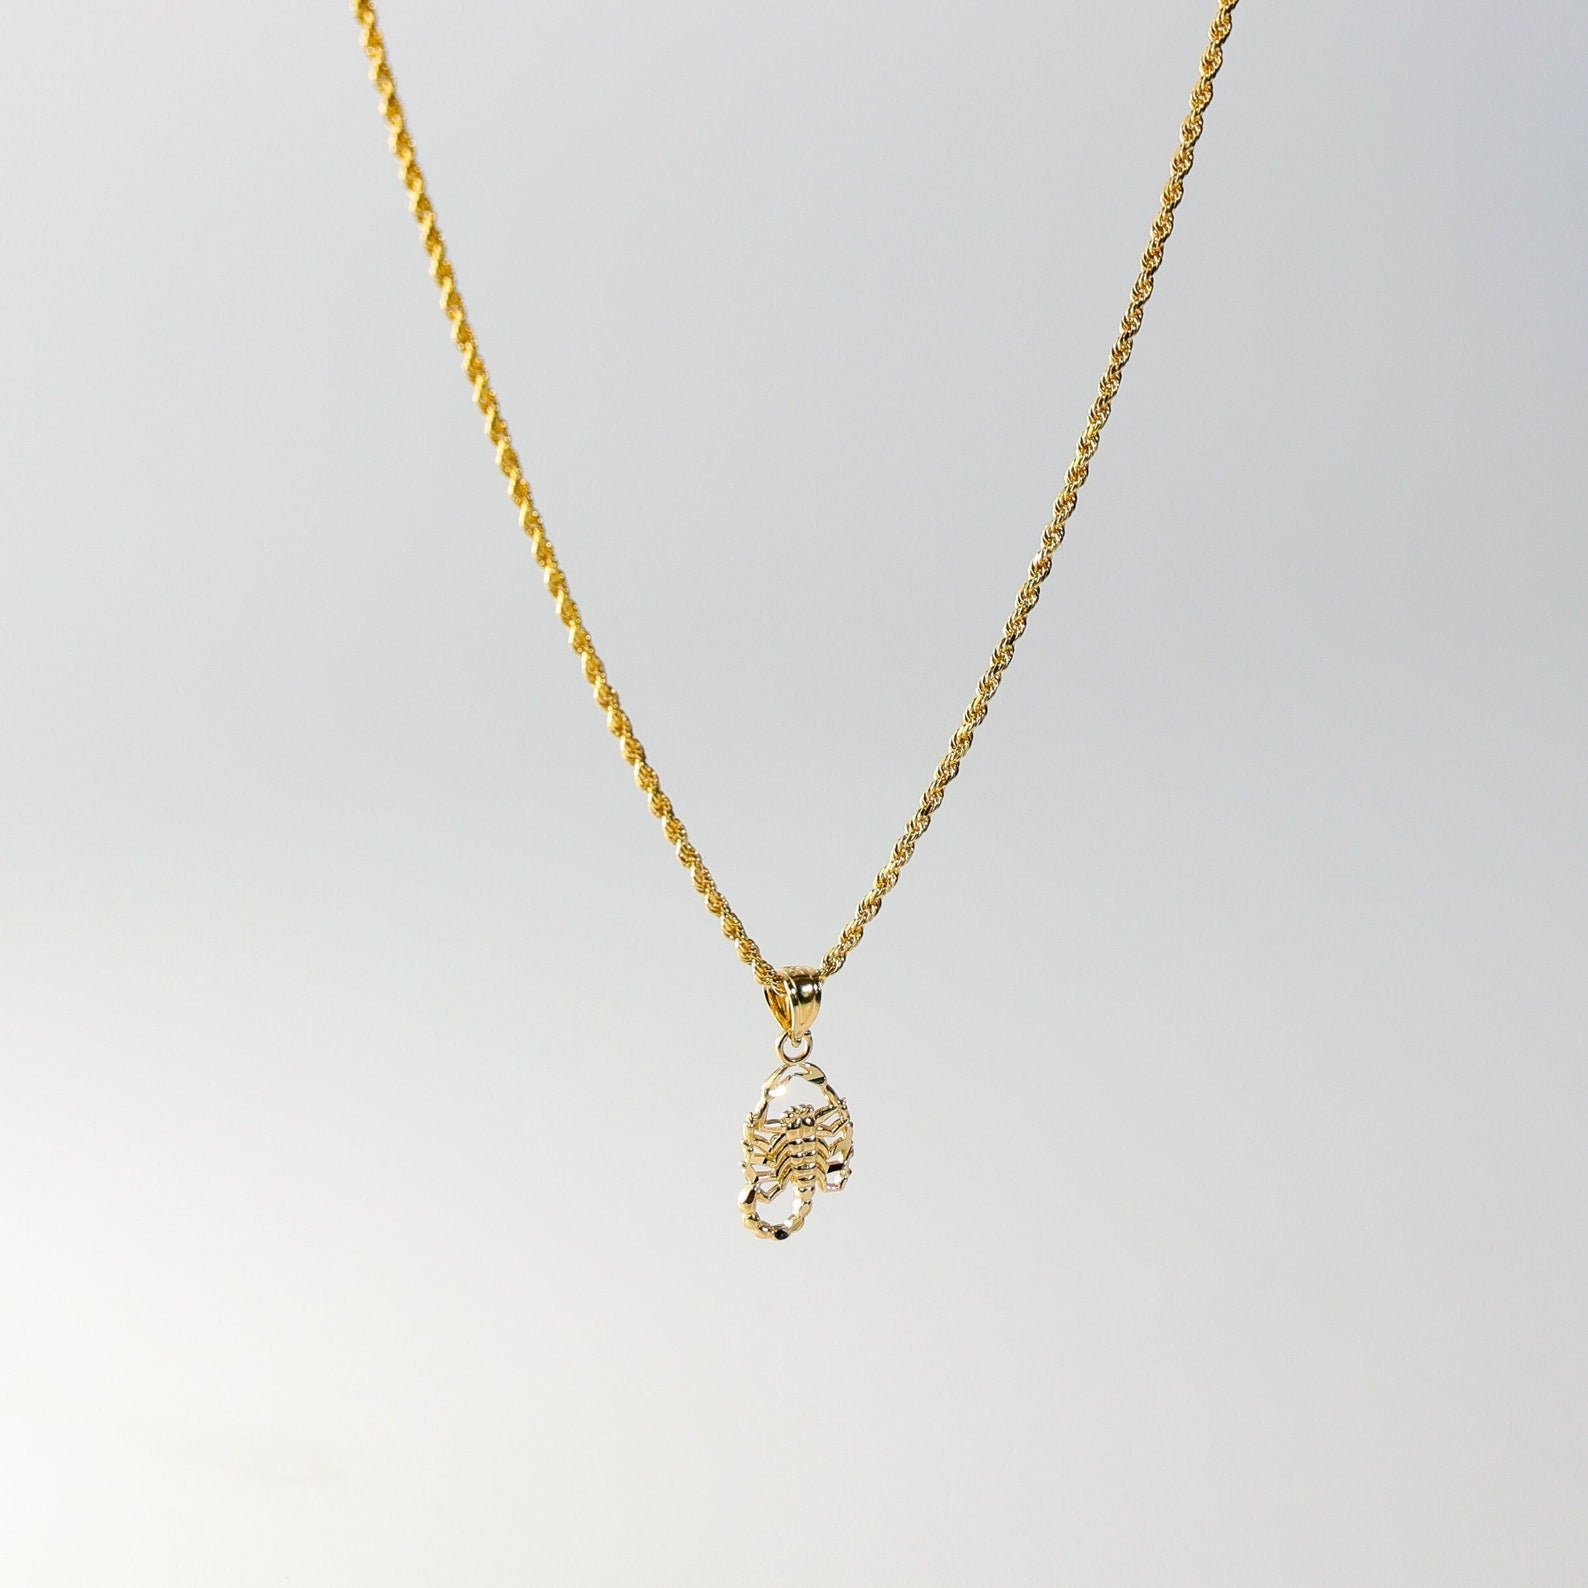 Gold Scorpion Pendant Model-1587 - Charlie & Co. Jewelry